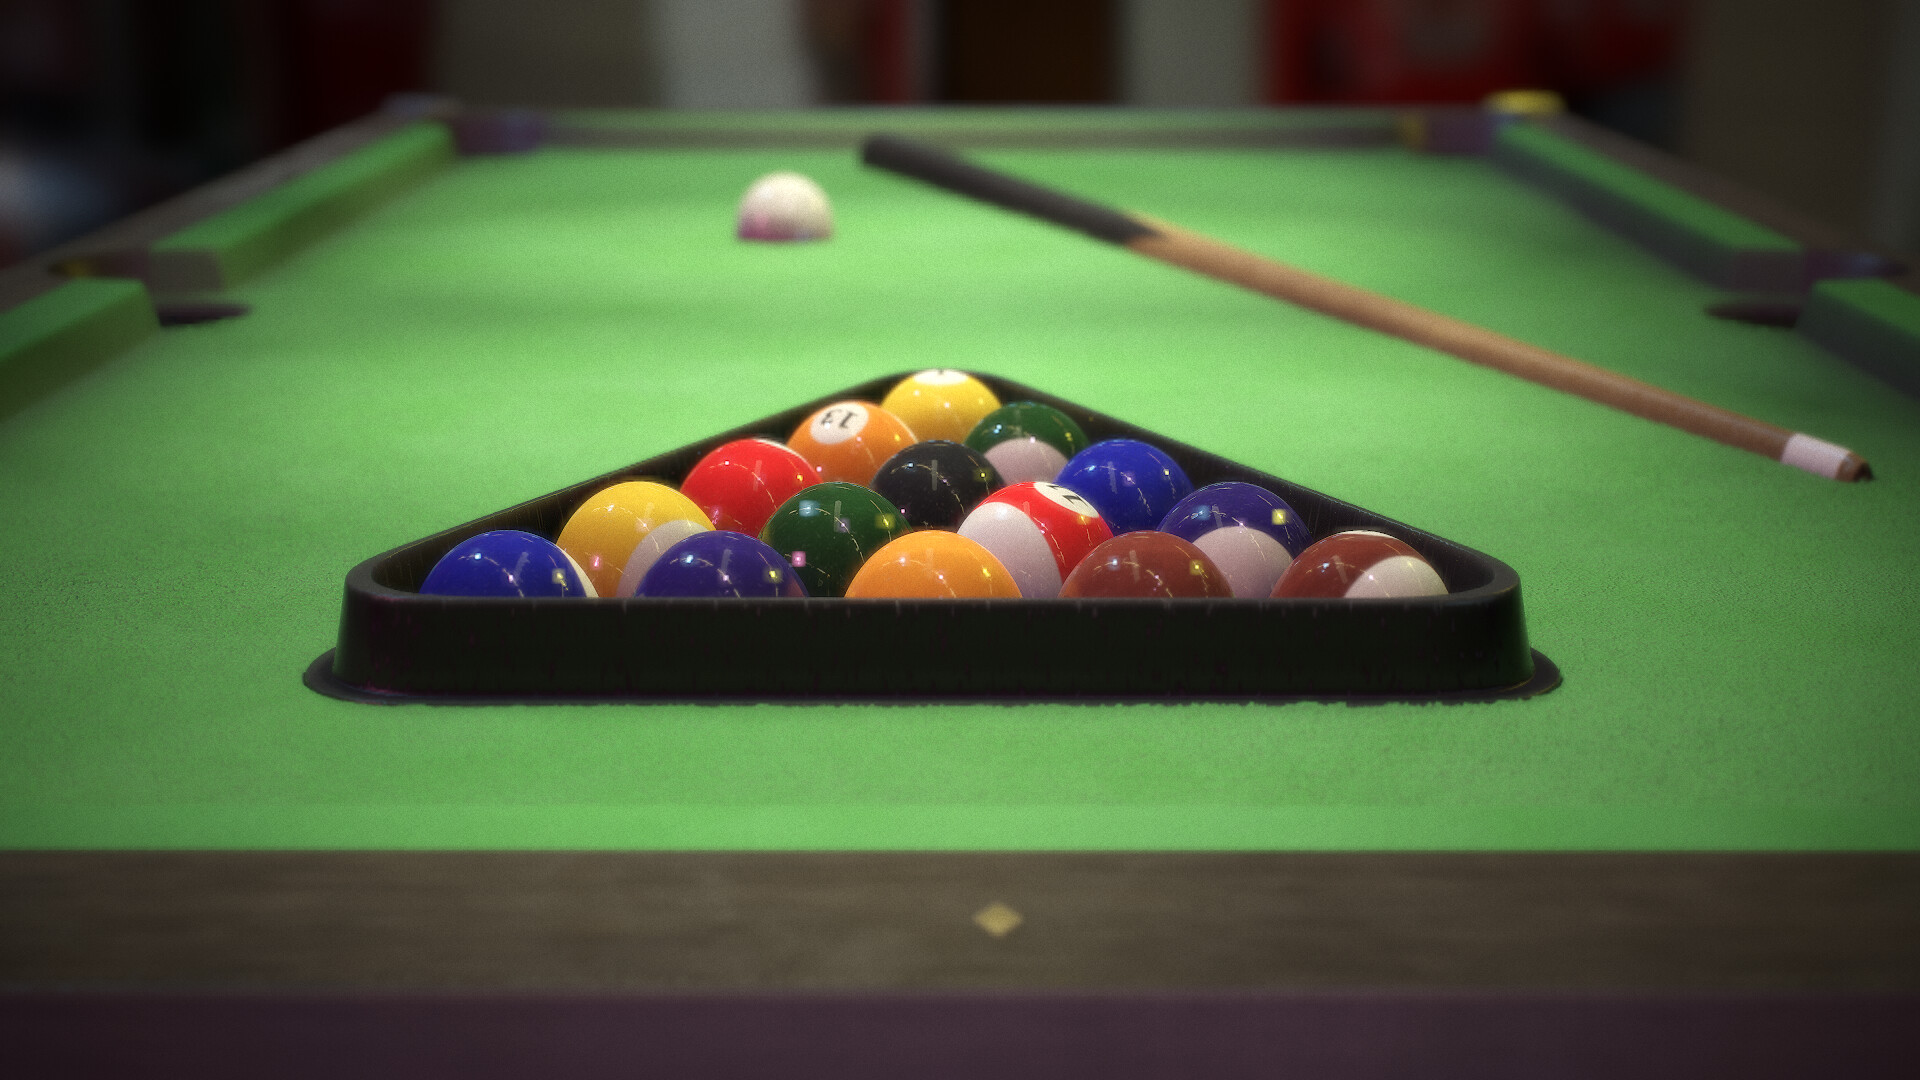 ArtStation - 8 Ball Pool Game Assets 3D Pack